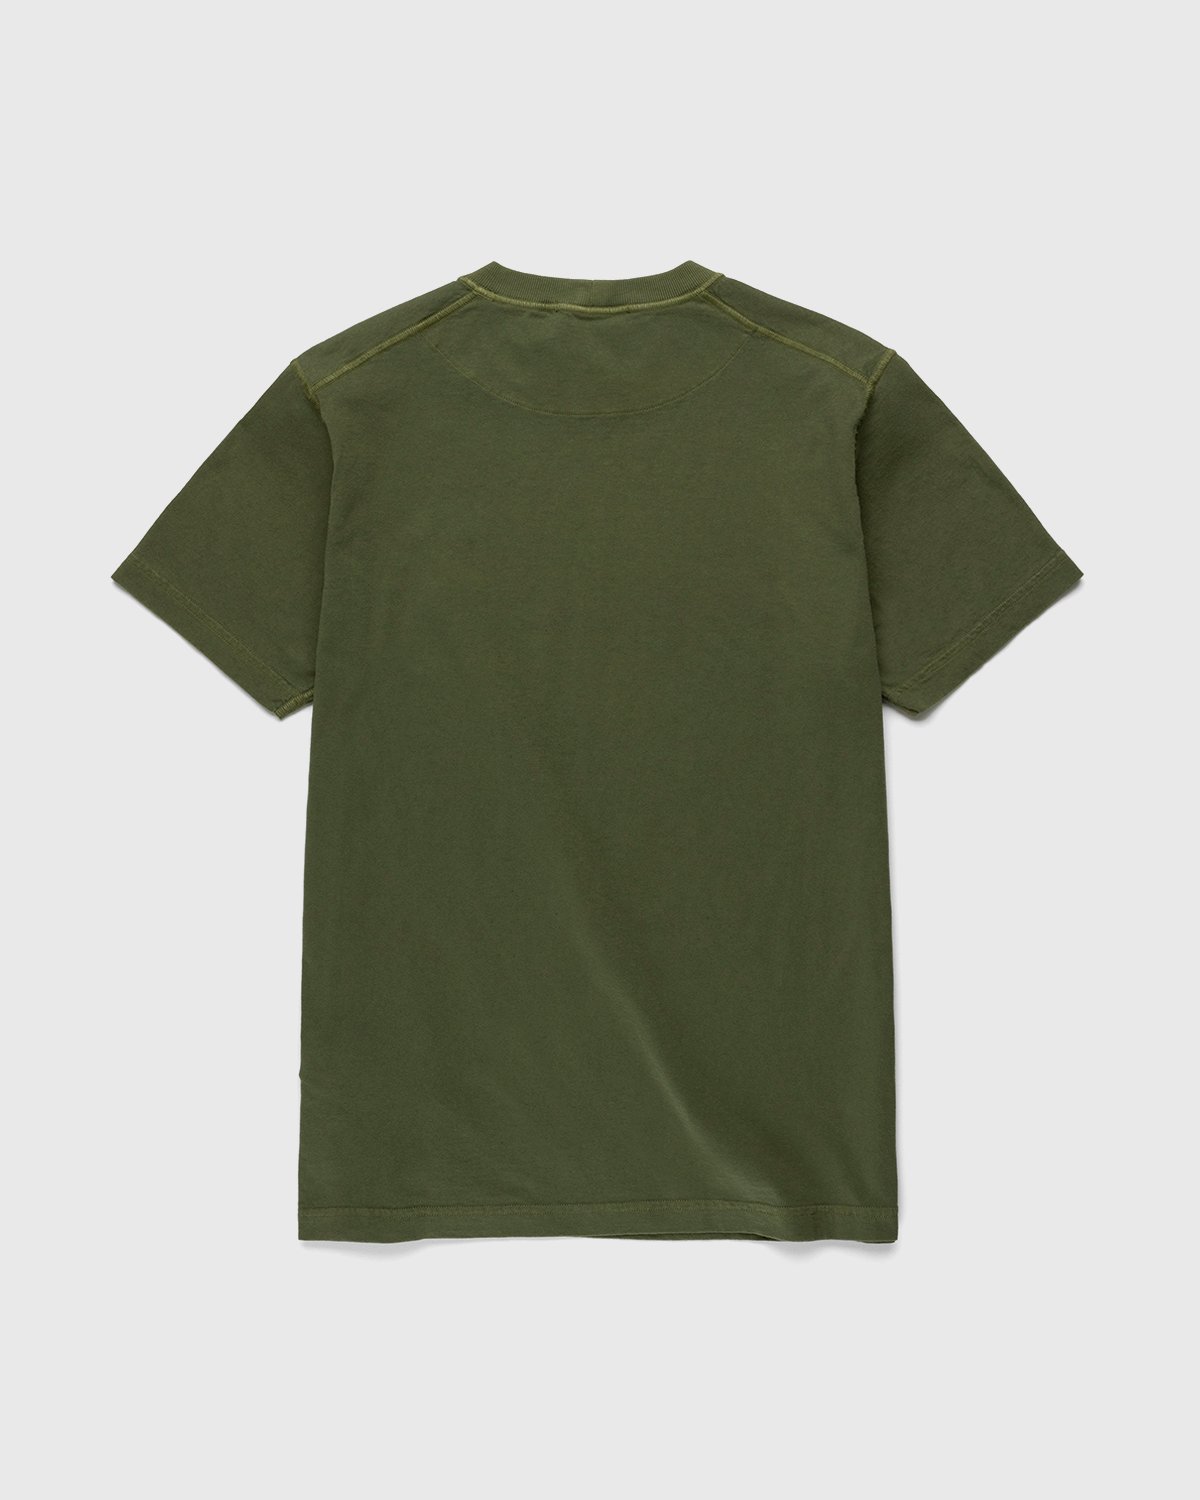 Stone Island - 23757 Garment-Dyed Fissato T-Shirt Olive Green - Clothing - Green - Image 2